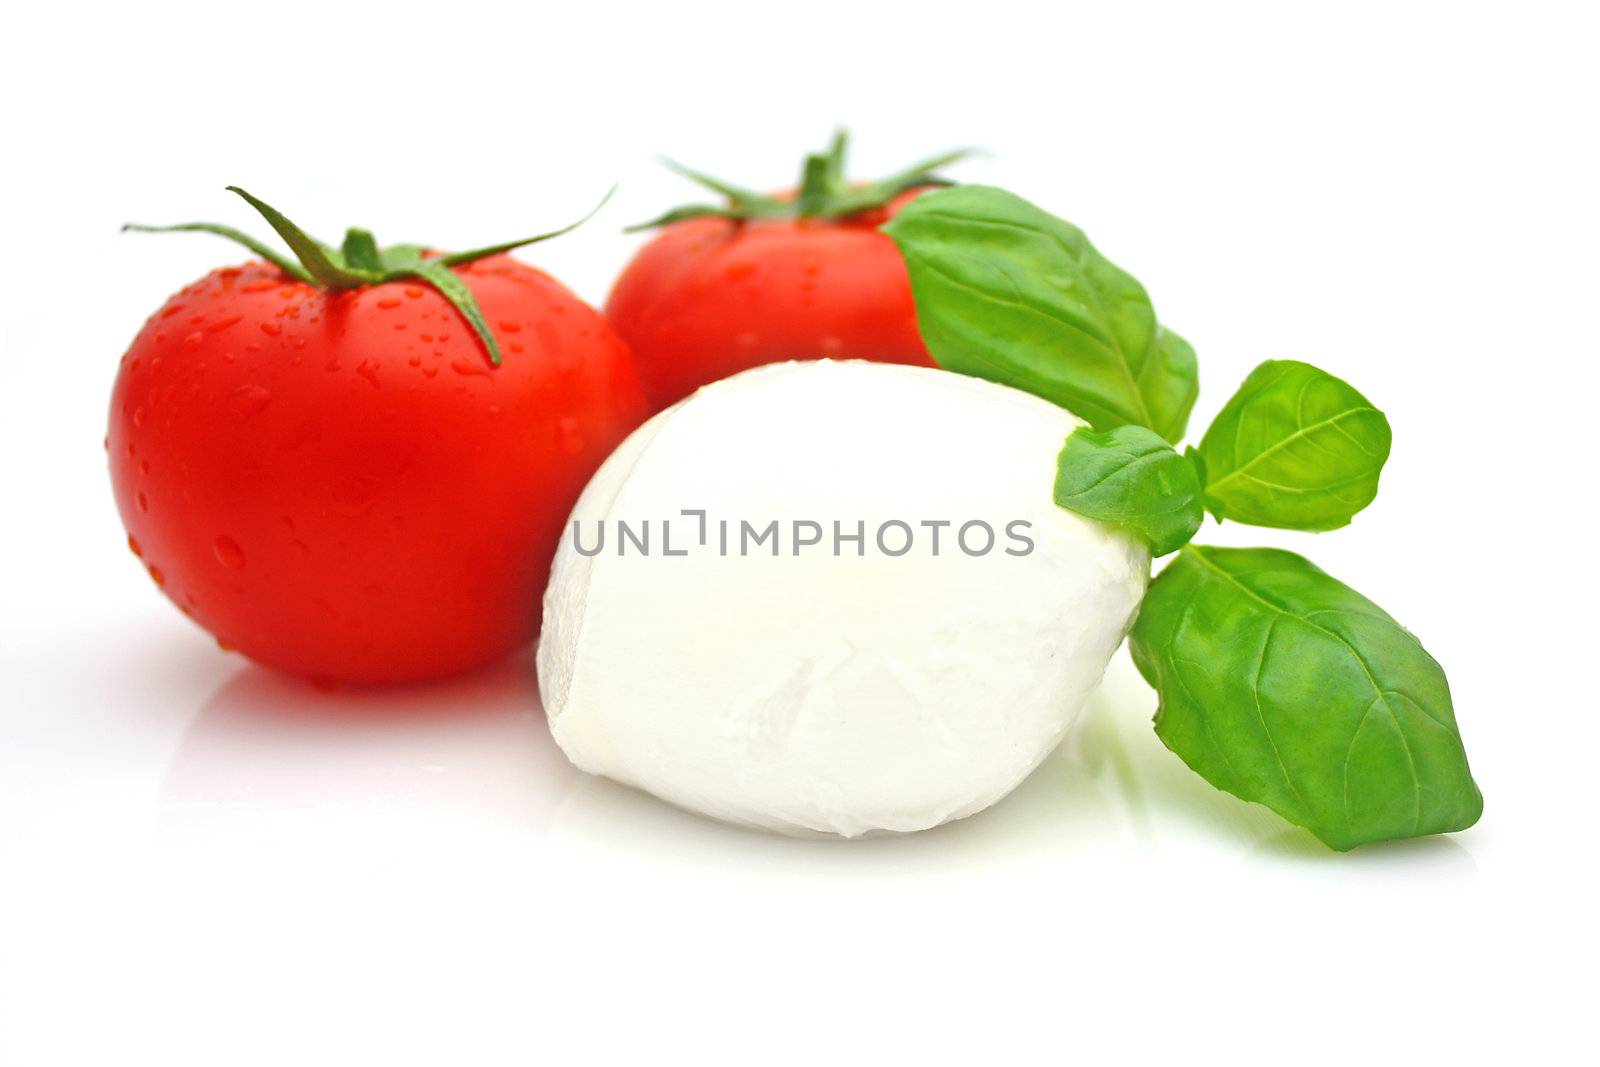 Tomato mozzarella